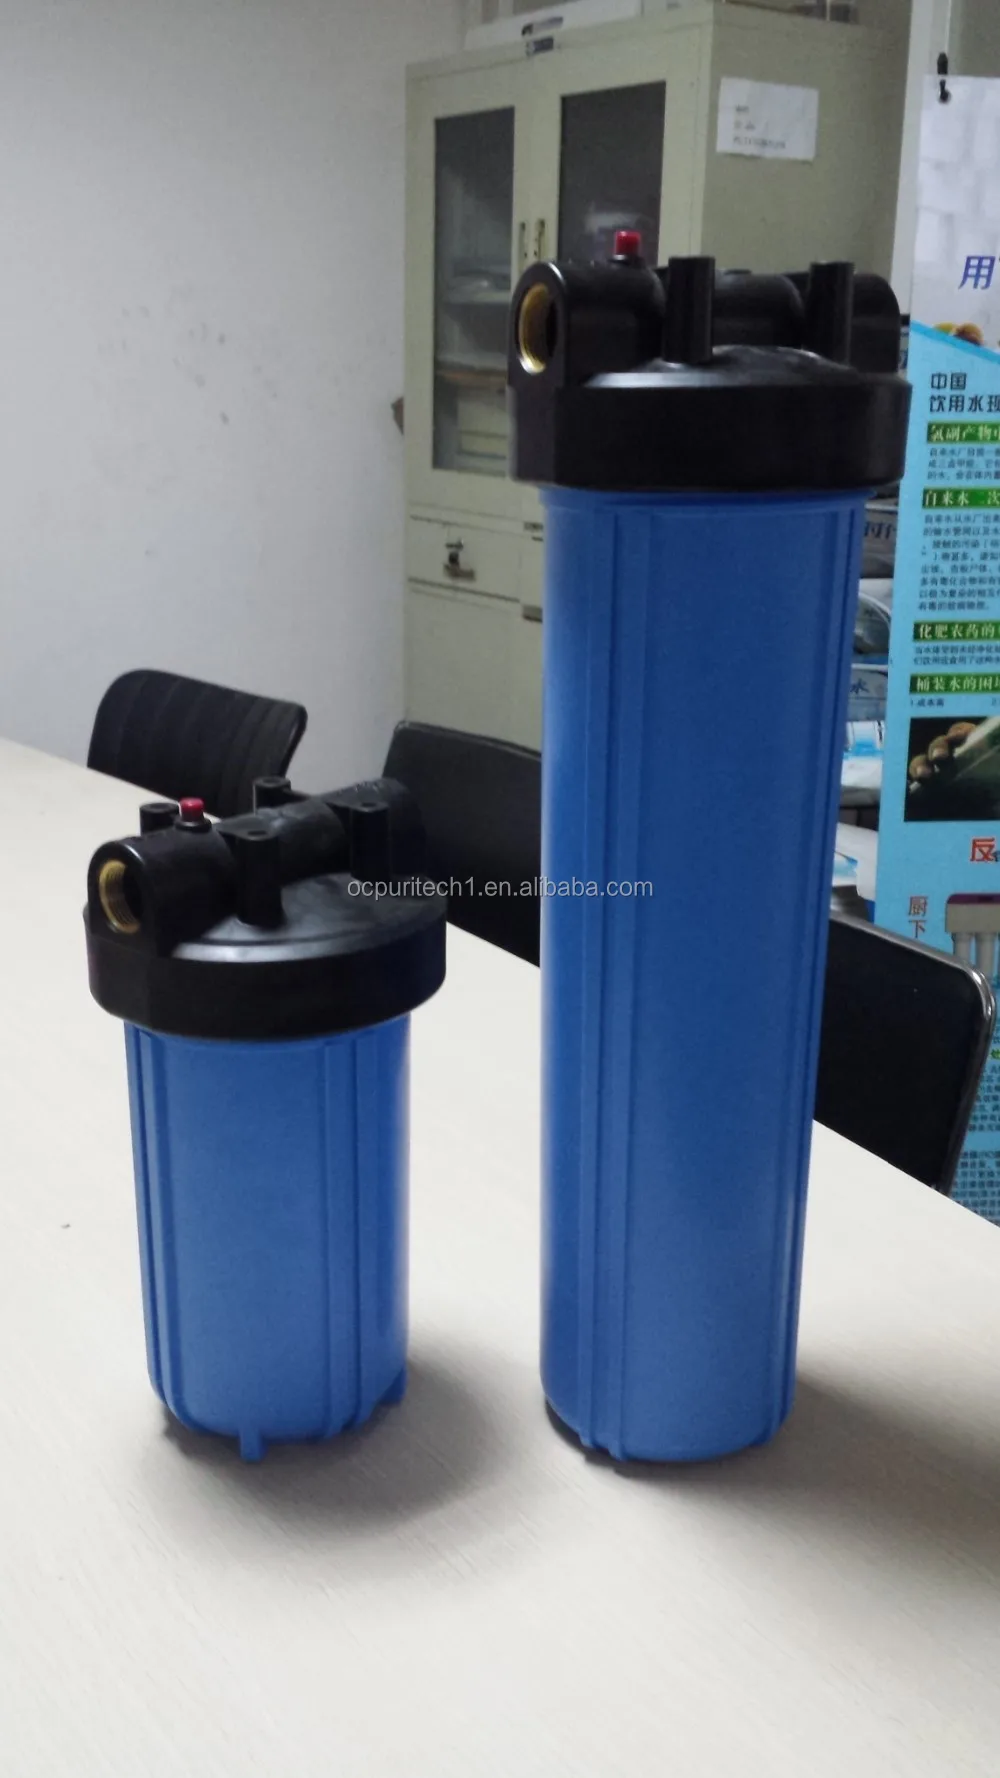 20 inch cartridge water filter housing